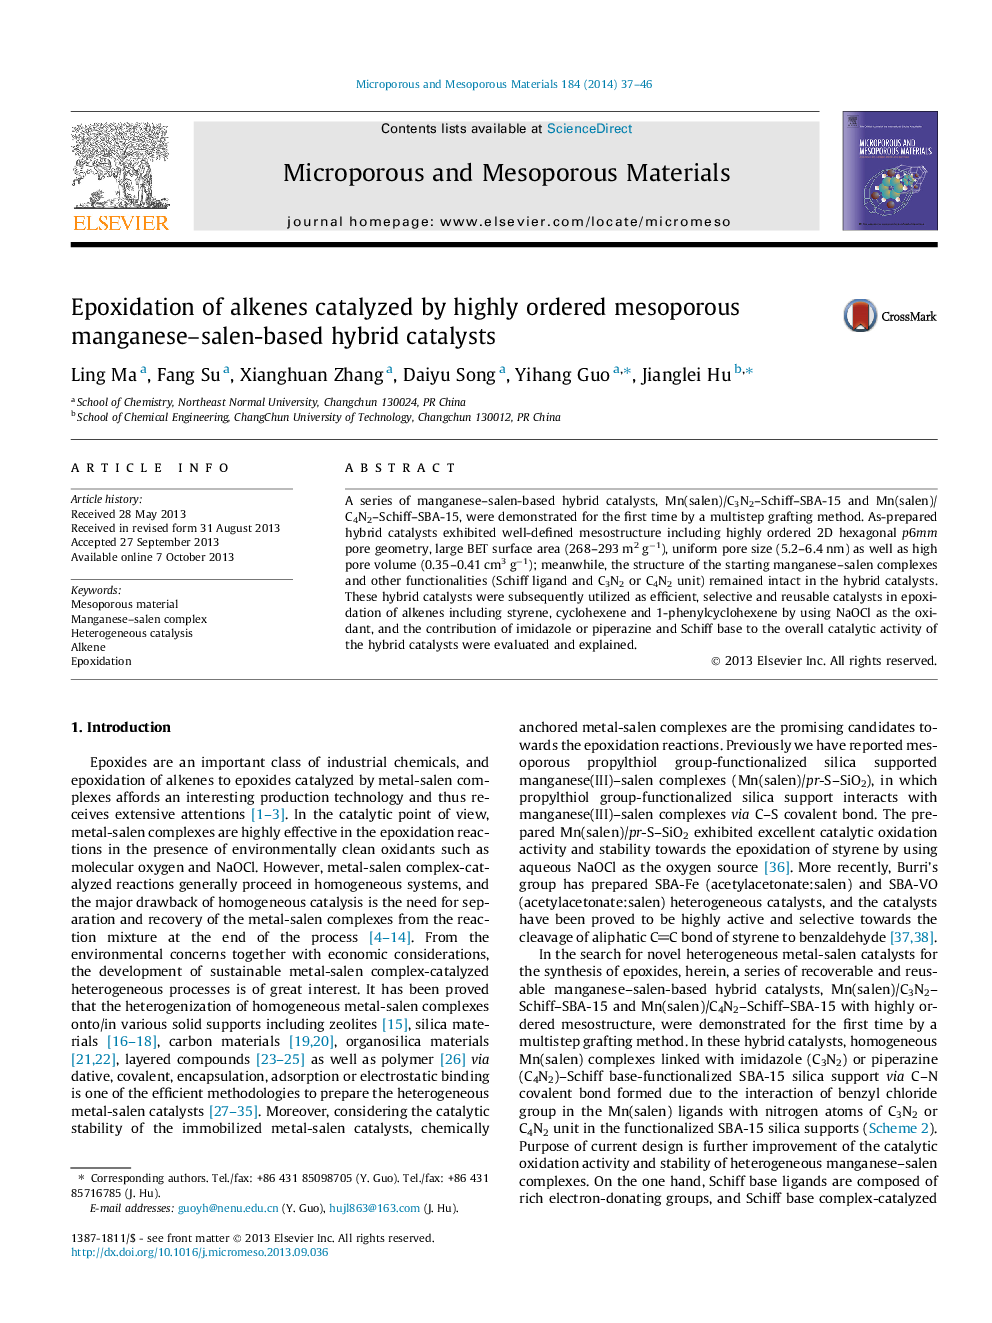 Epoxidation of alkenes catalyzed by highly ordered mesoporous manganese–salen-based hybrid catalysts